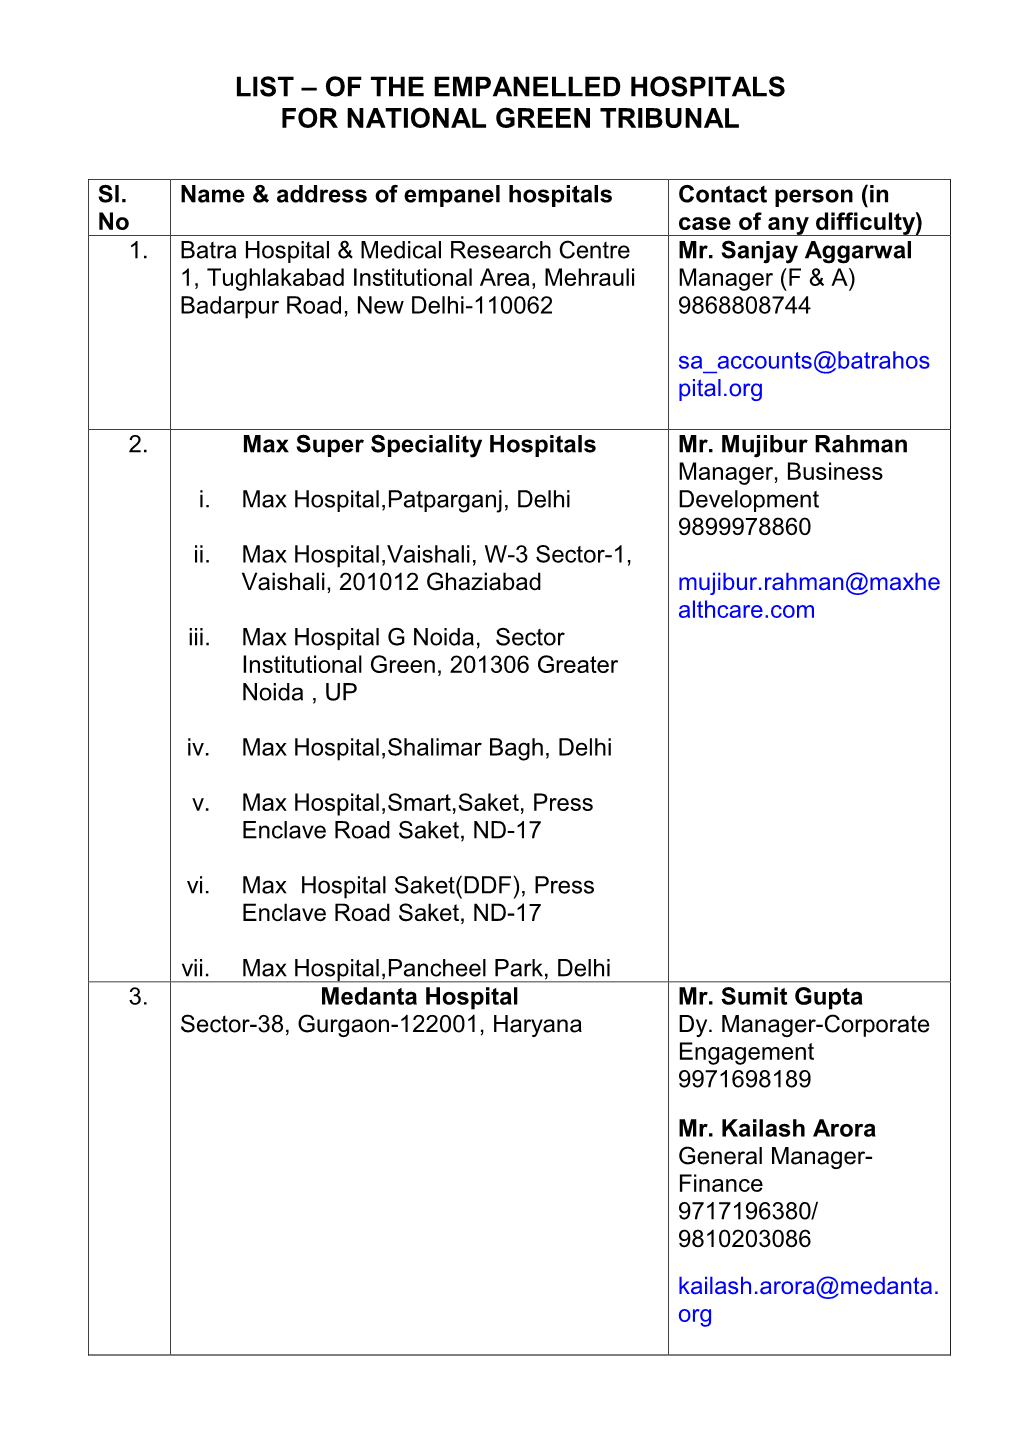 List of Empanelled Hospital